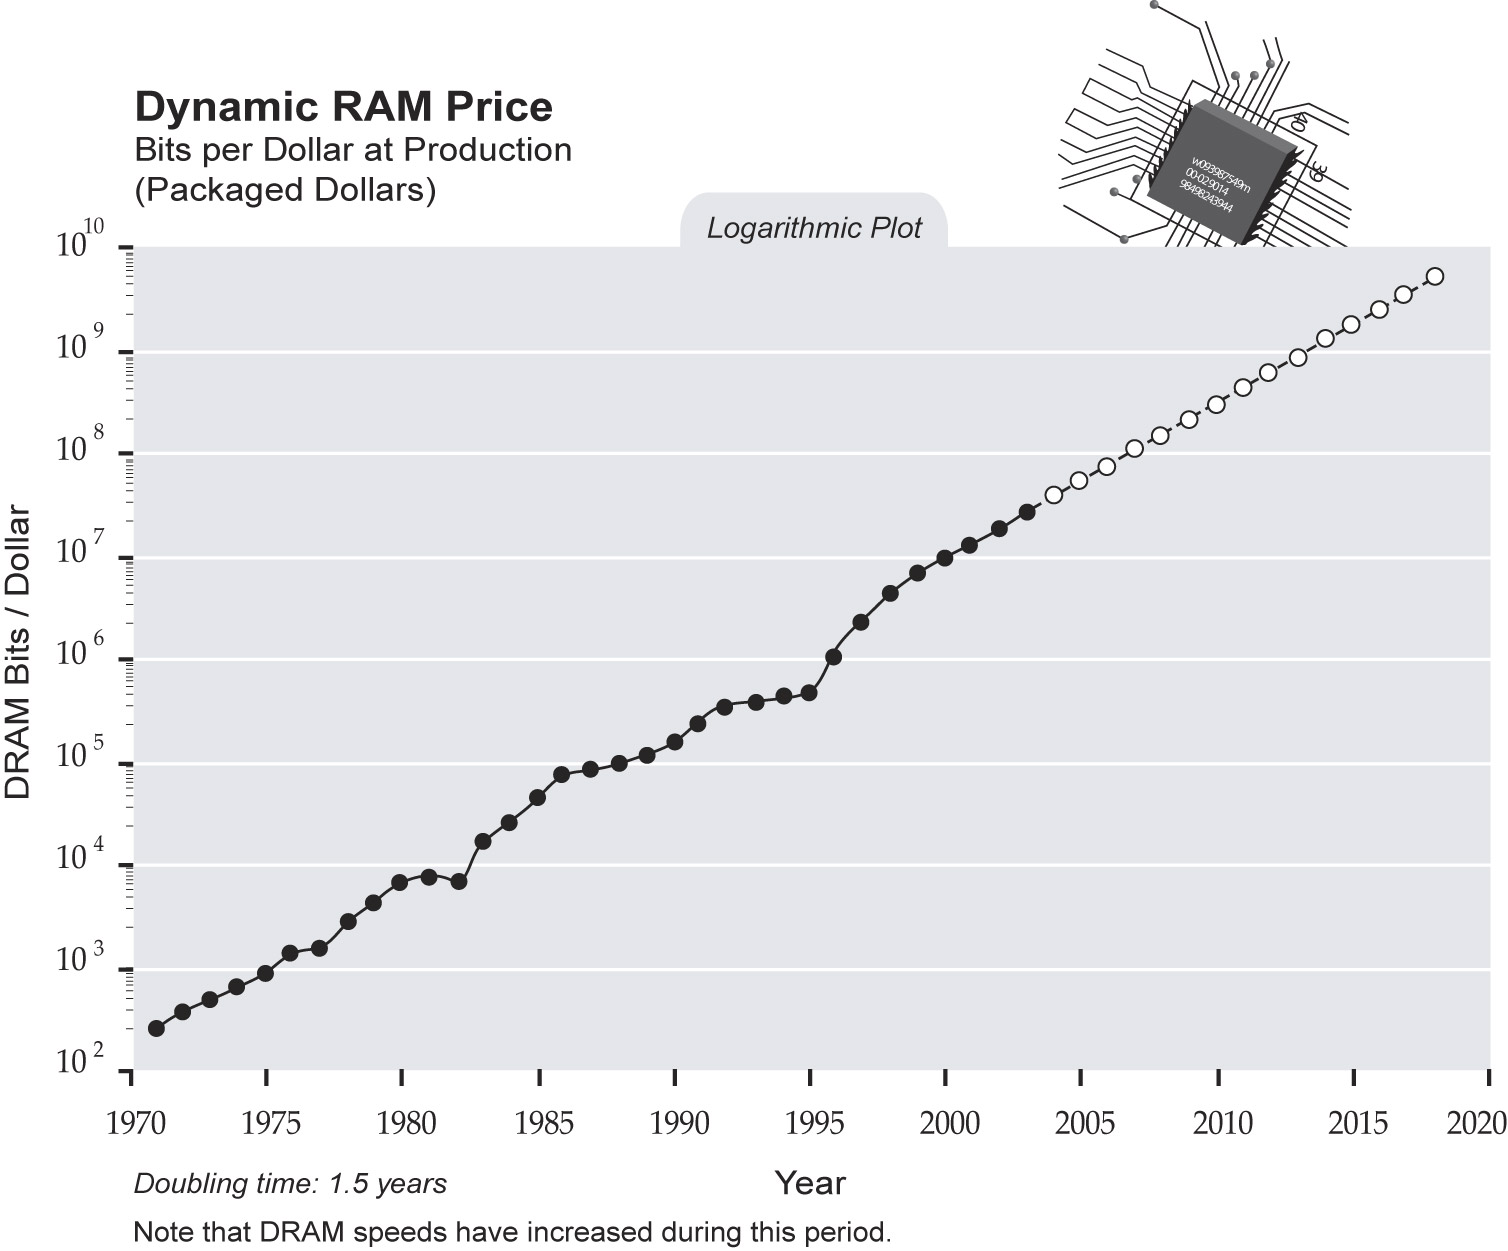 Ddr4 Ram Price Chart